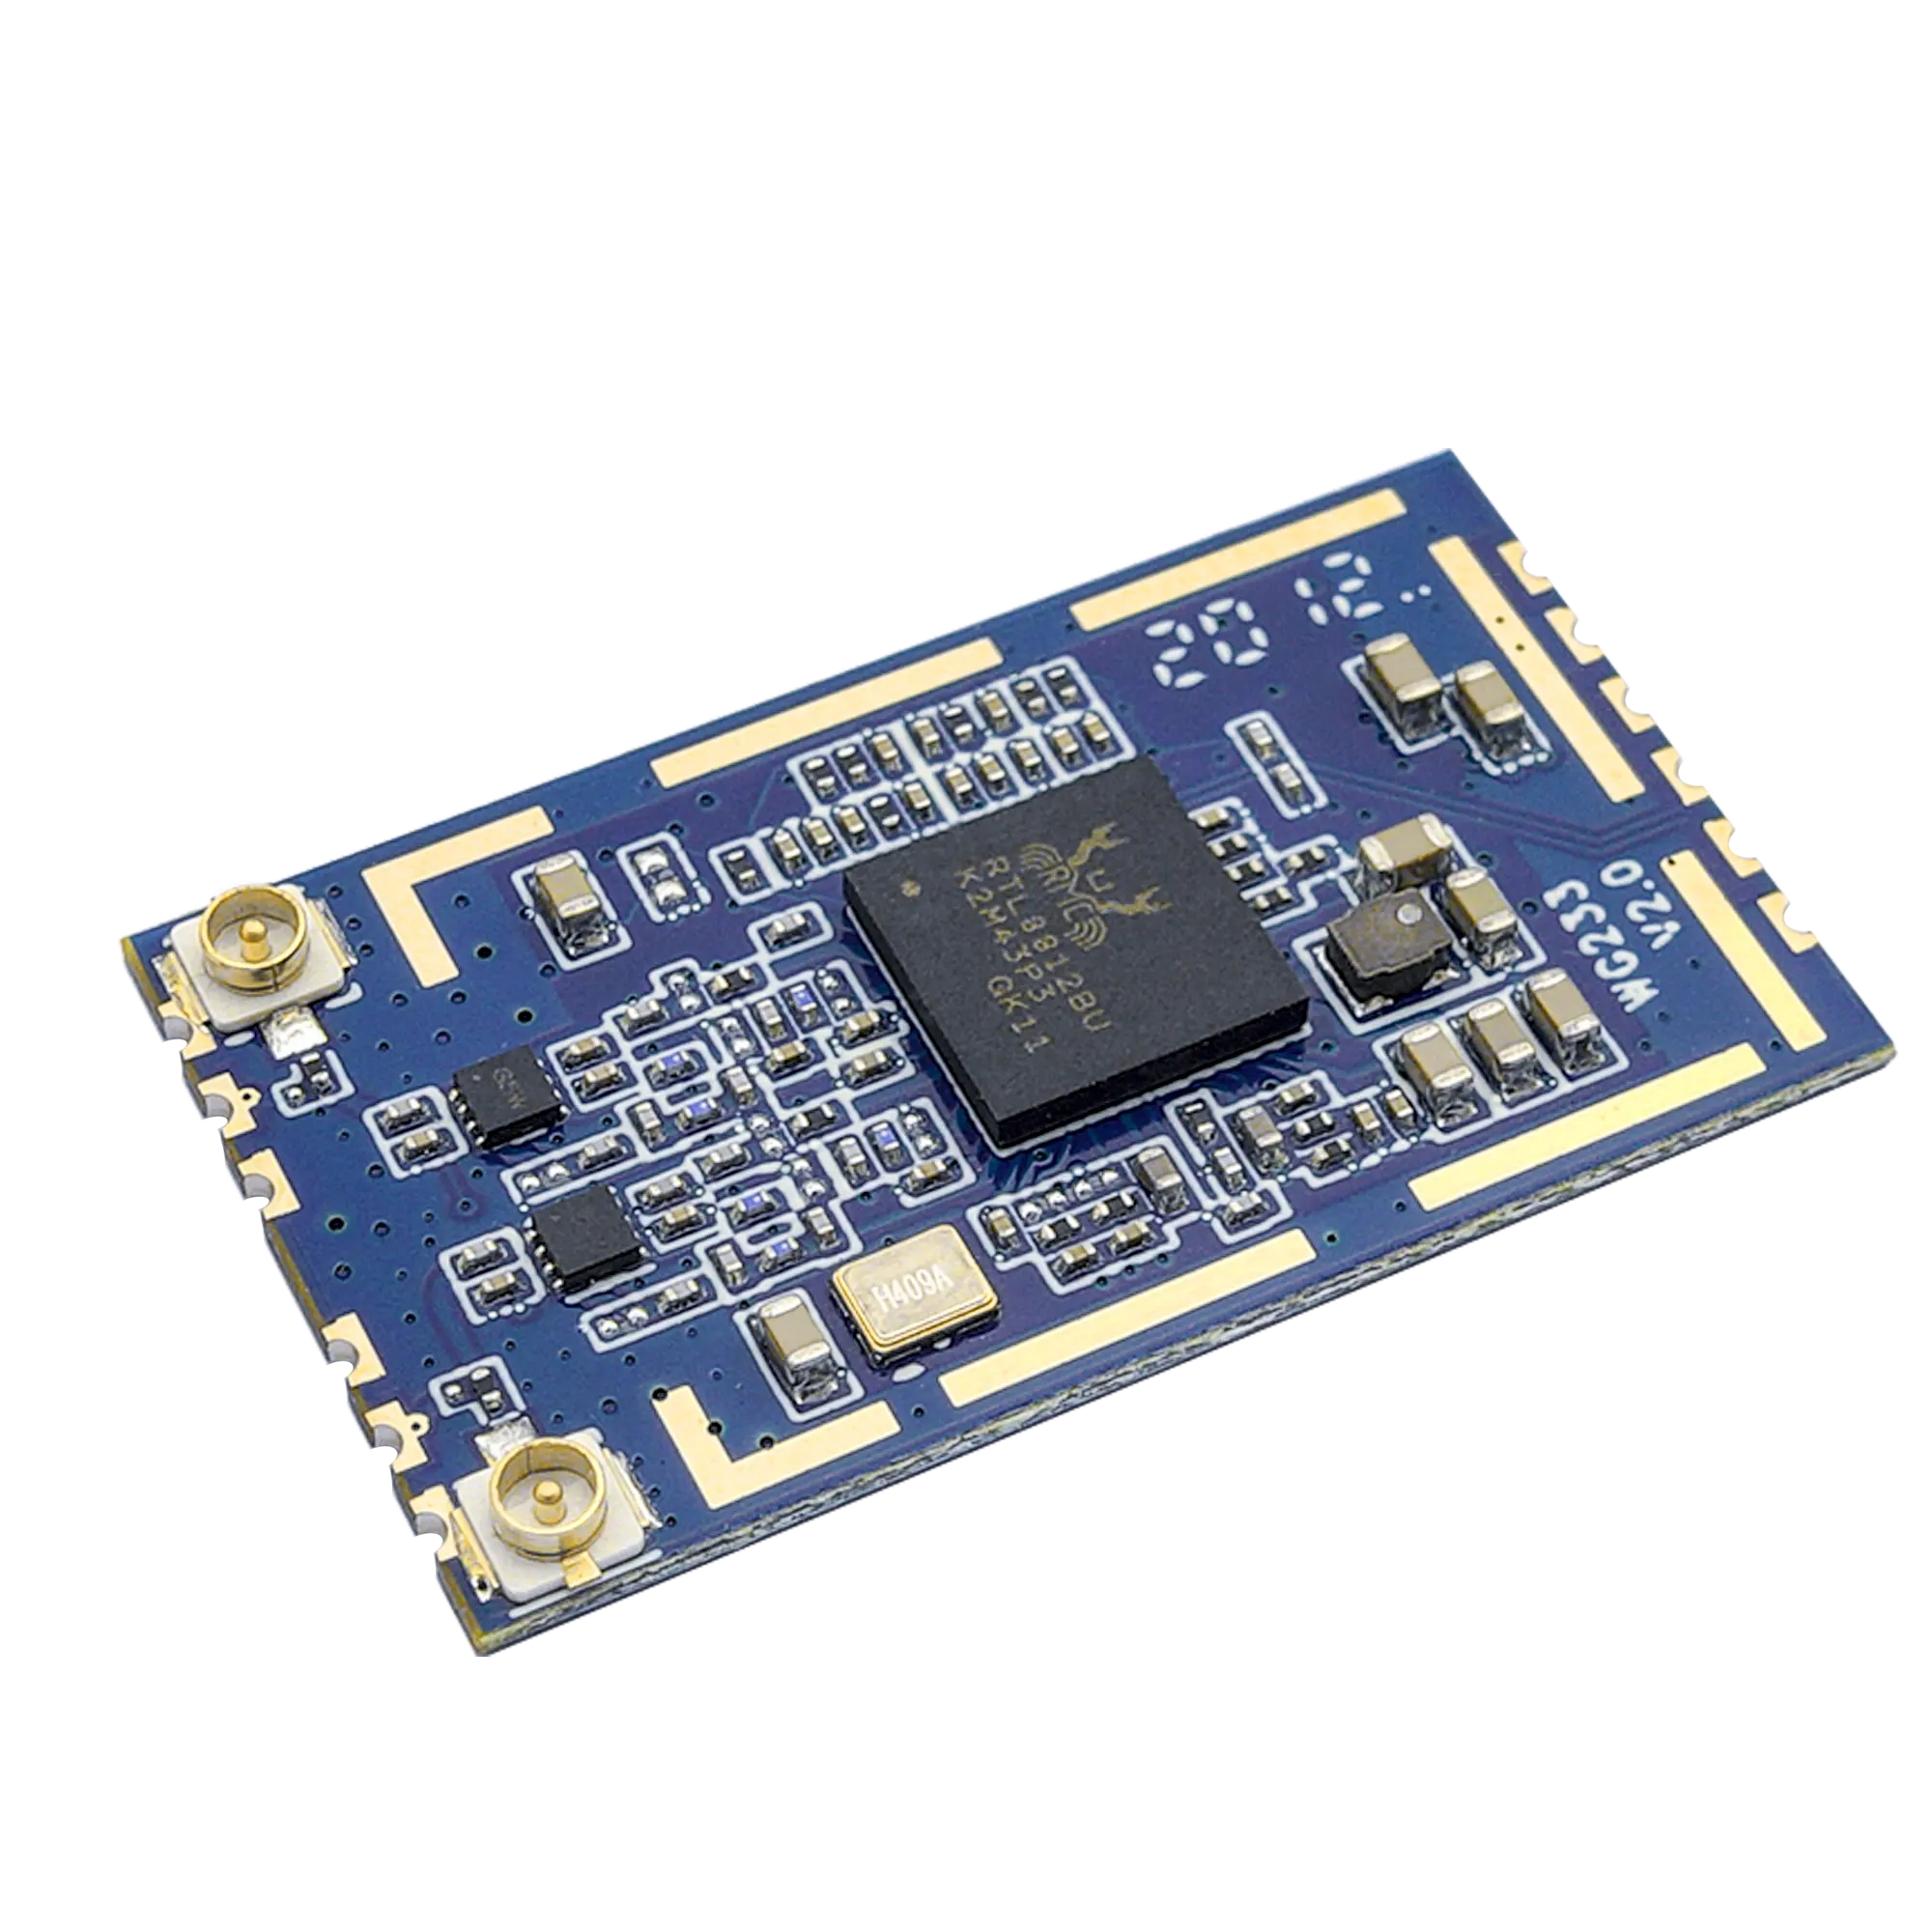 Realtek RTL8812BU Chip Wireless WIFI Module 3.3V / 5V Connector Development Board USB 2.0 AC 5G / 2.4G Support Windows/Linux/Mac